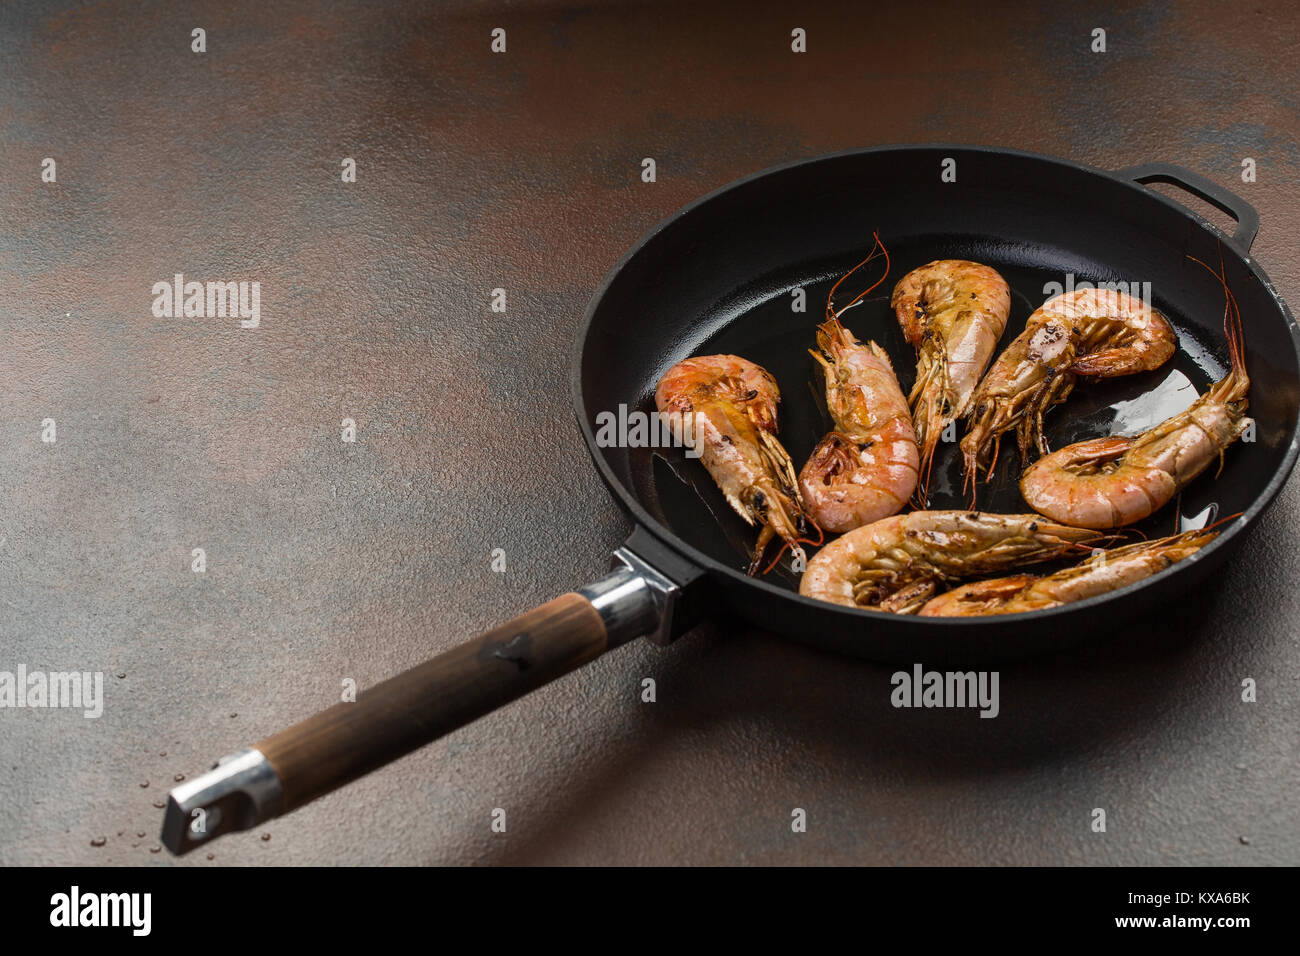 https://c8.alamy.com/comp/KXA6BK/giant-prawns-on-hot-pan-stir-fried-in-butter-large-tiger-shrimps-or-KXA6BK.jpg